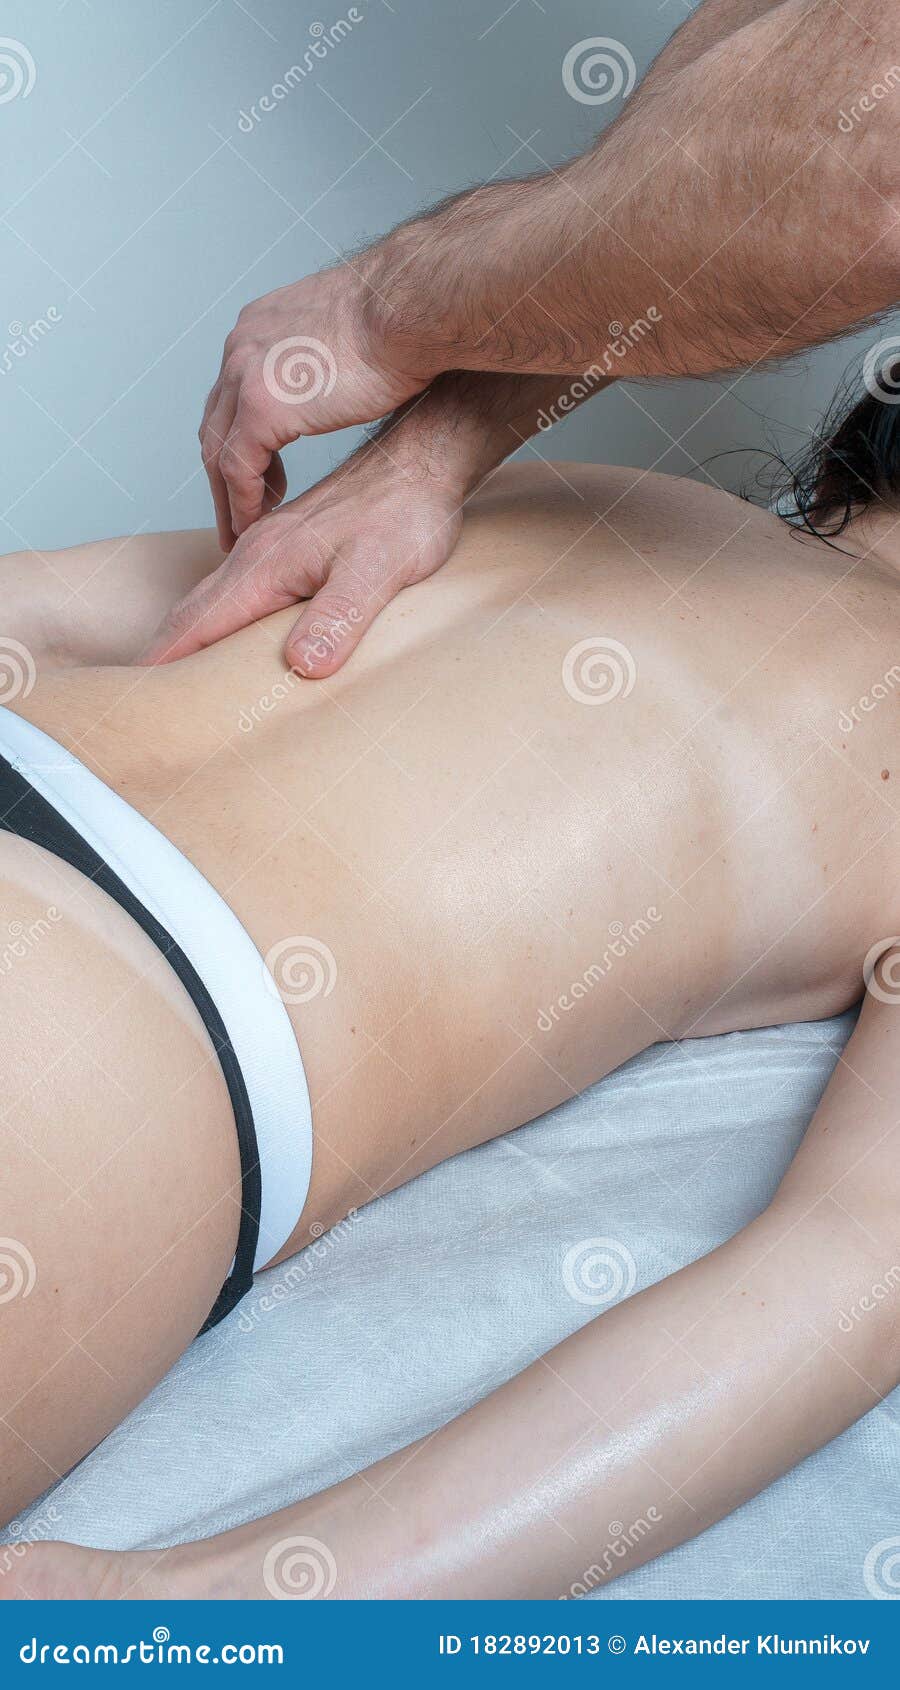 donald parise share 16 hands erotic massage photos